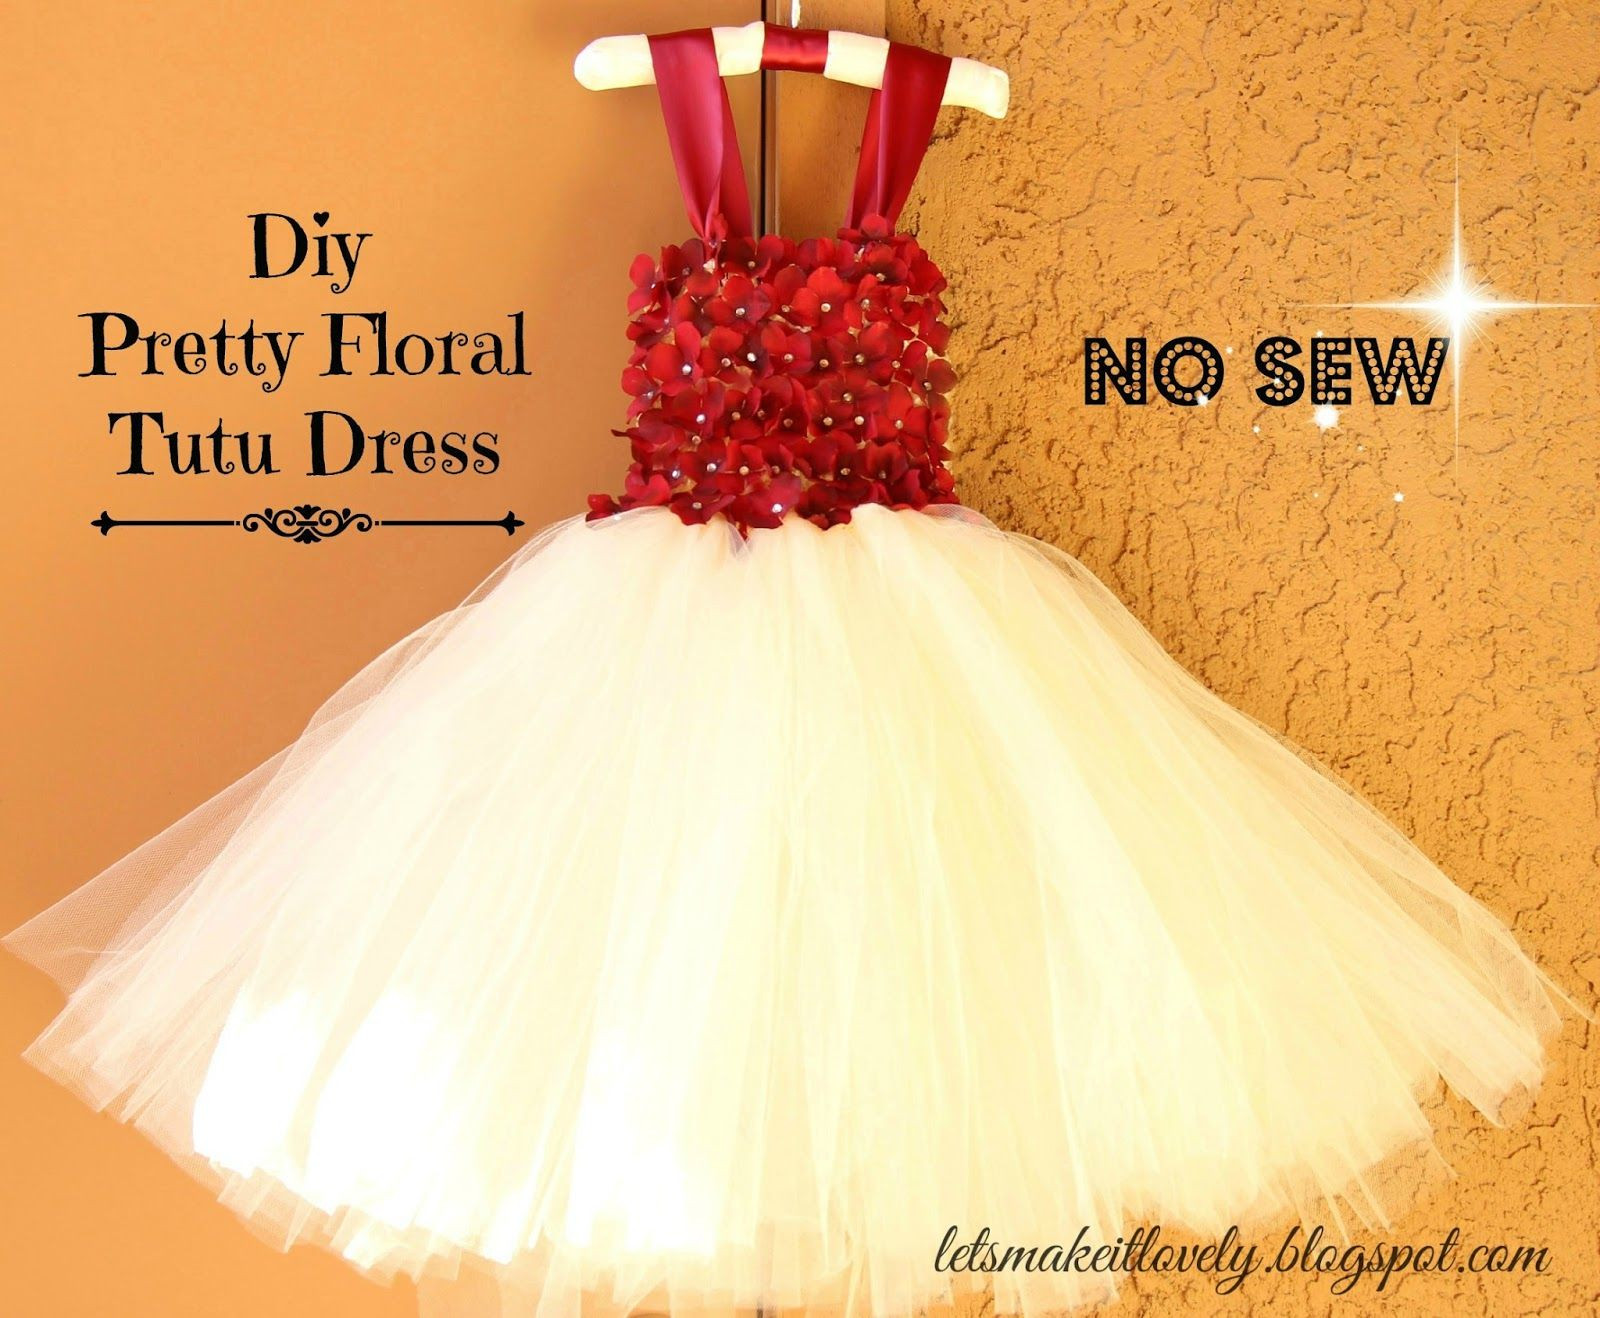 DIY Tutu Dress For Toddler
 Let s make it lovely DIY Flower girl dress or Tutu dress